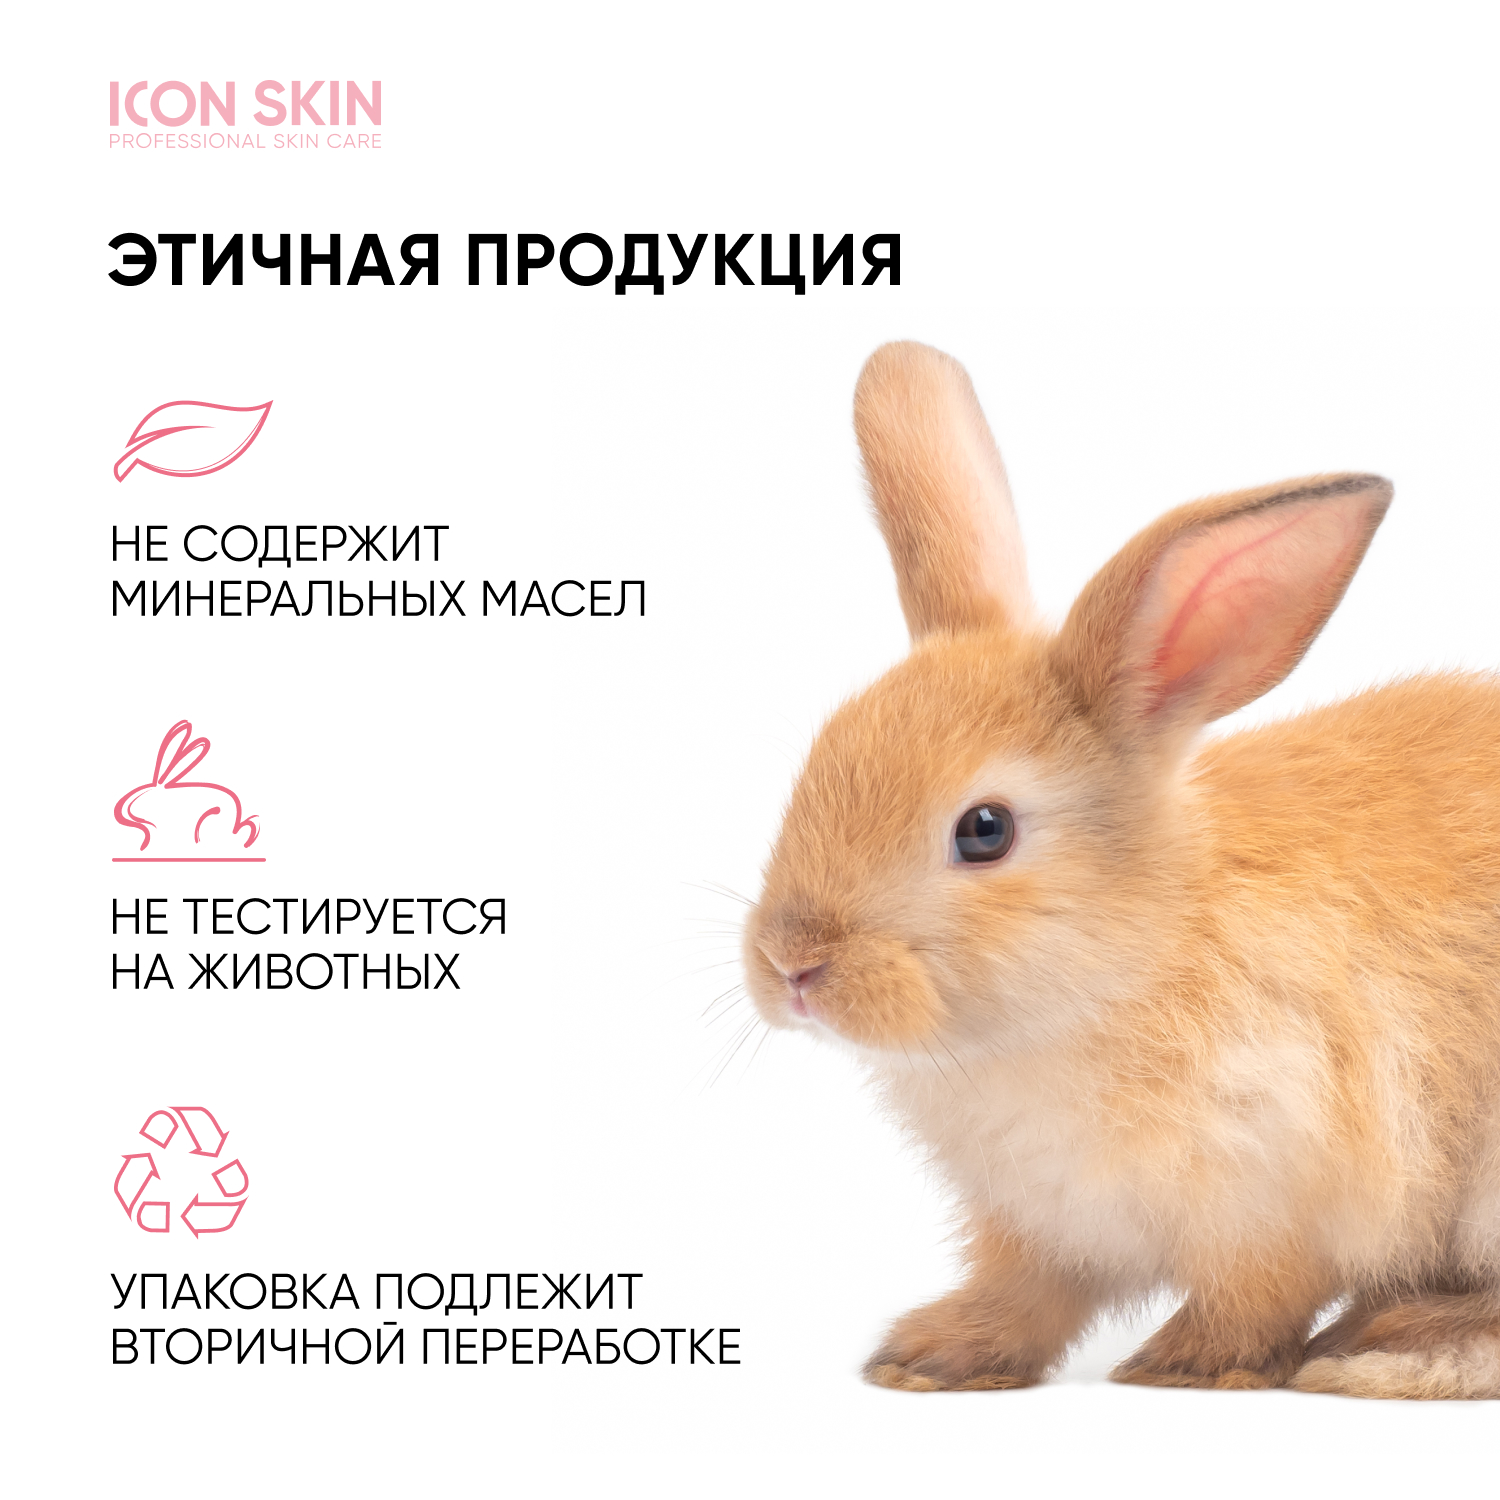 Крем-гель для умывания ICON SKIN очищающий c про- и пребиотиками skinbiom - фото 9